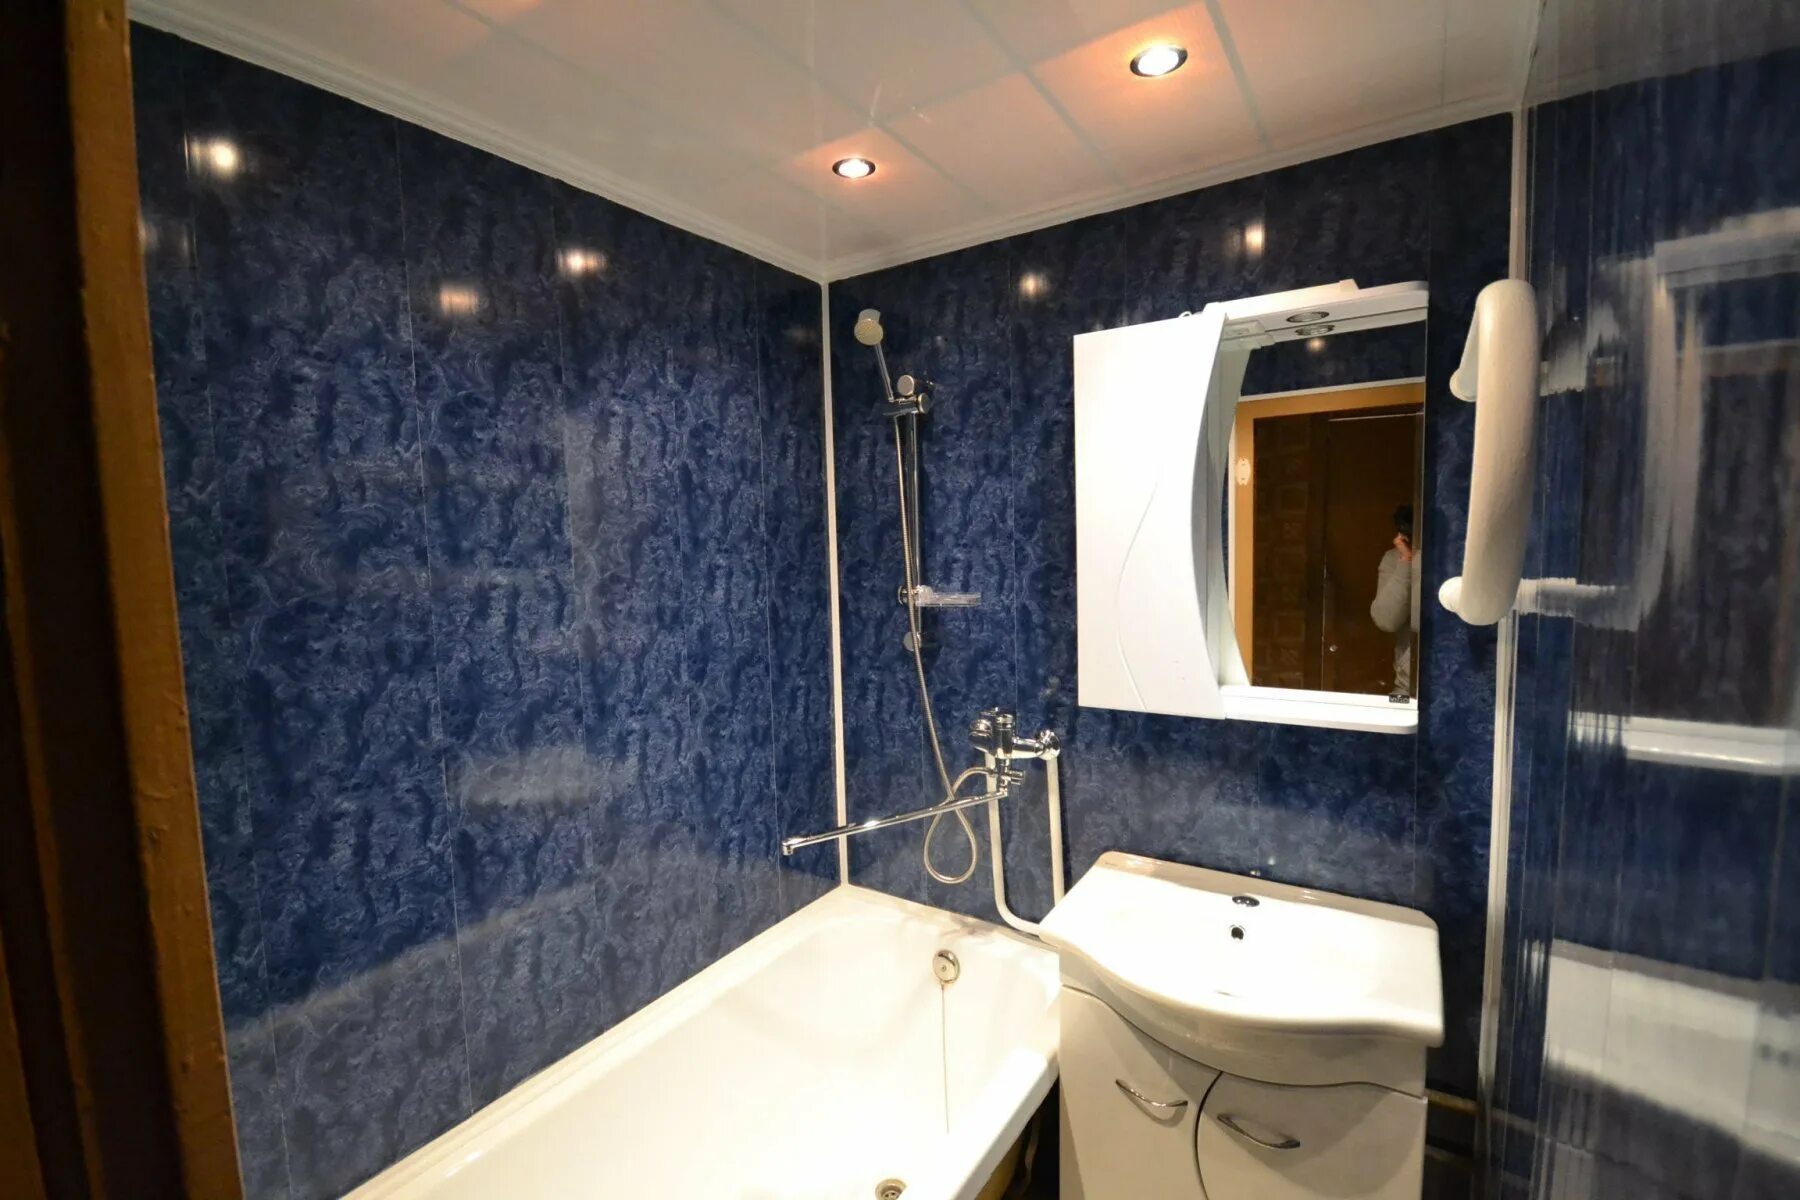 Отделка ванной комнаты панелями ПВХ. Ванная комната отделанная панелями. Ванная комната из пластиковых панелей. Ванная комната отделанная пластиковыми панелями.